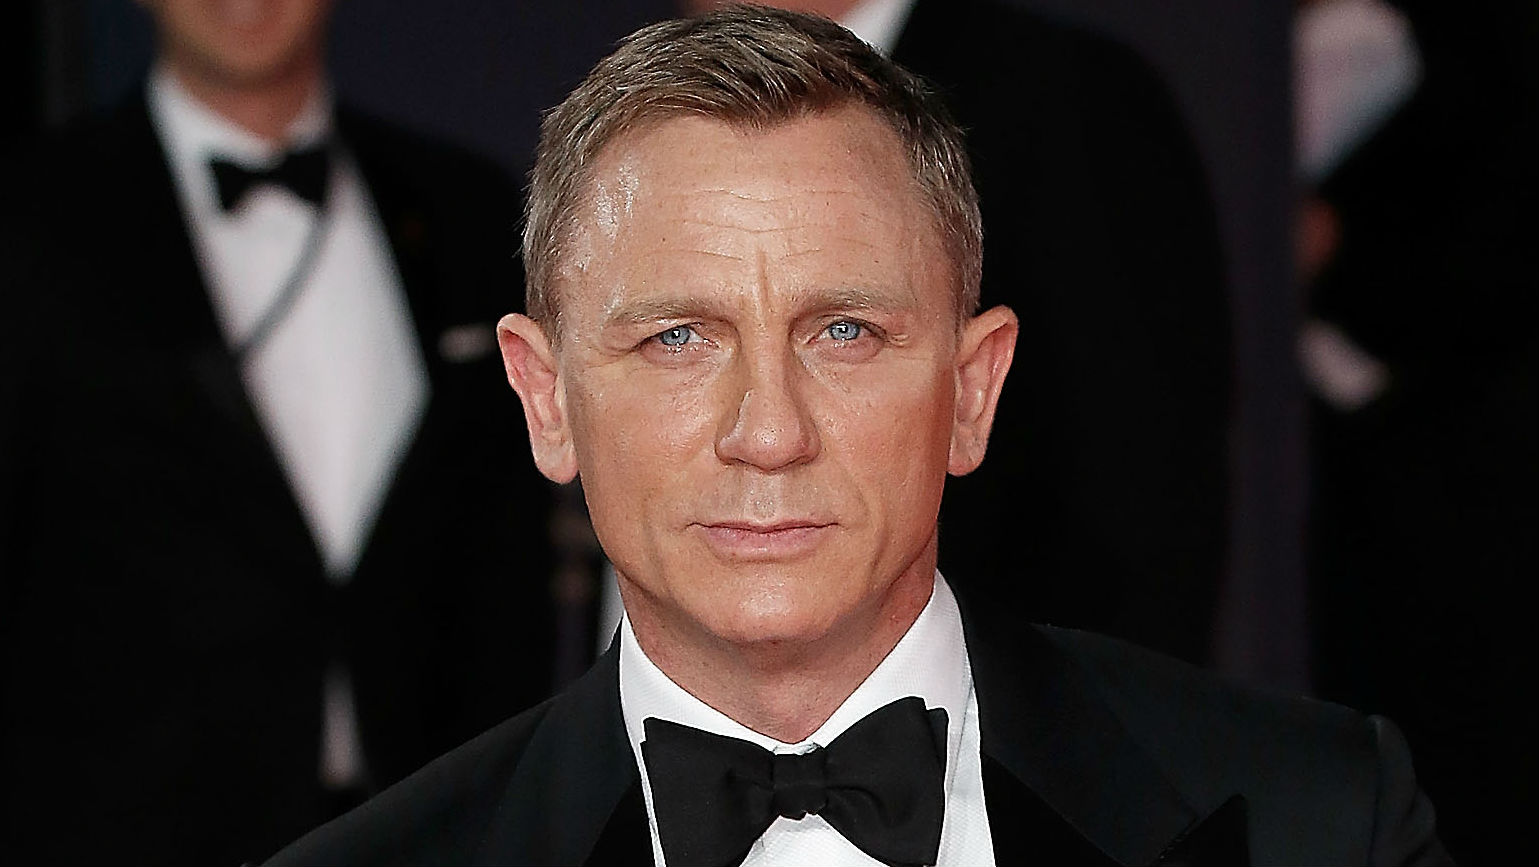 James Bond 'No Time to Die' head to OTT